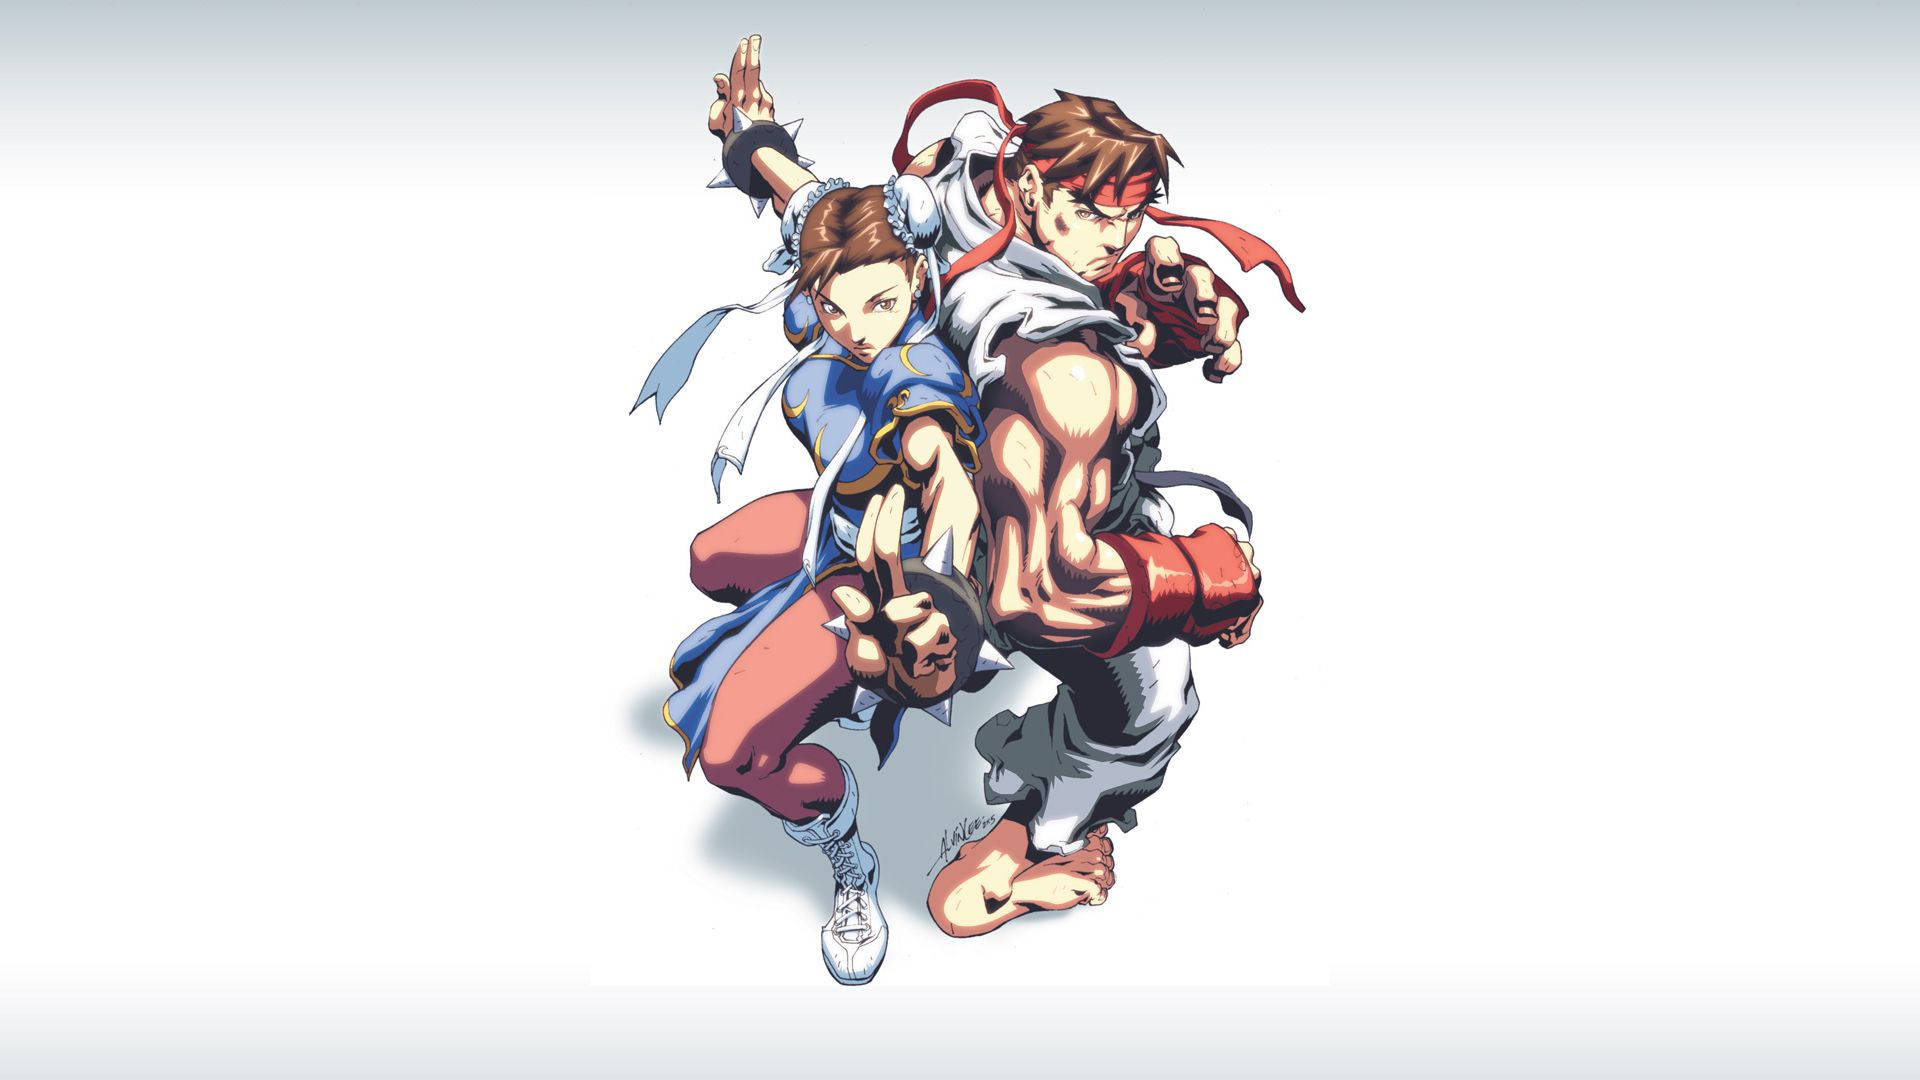 Chun-Li And Ryu Ultra Street Fighter Wallpaper